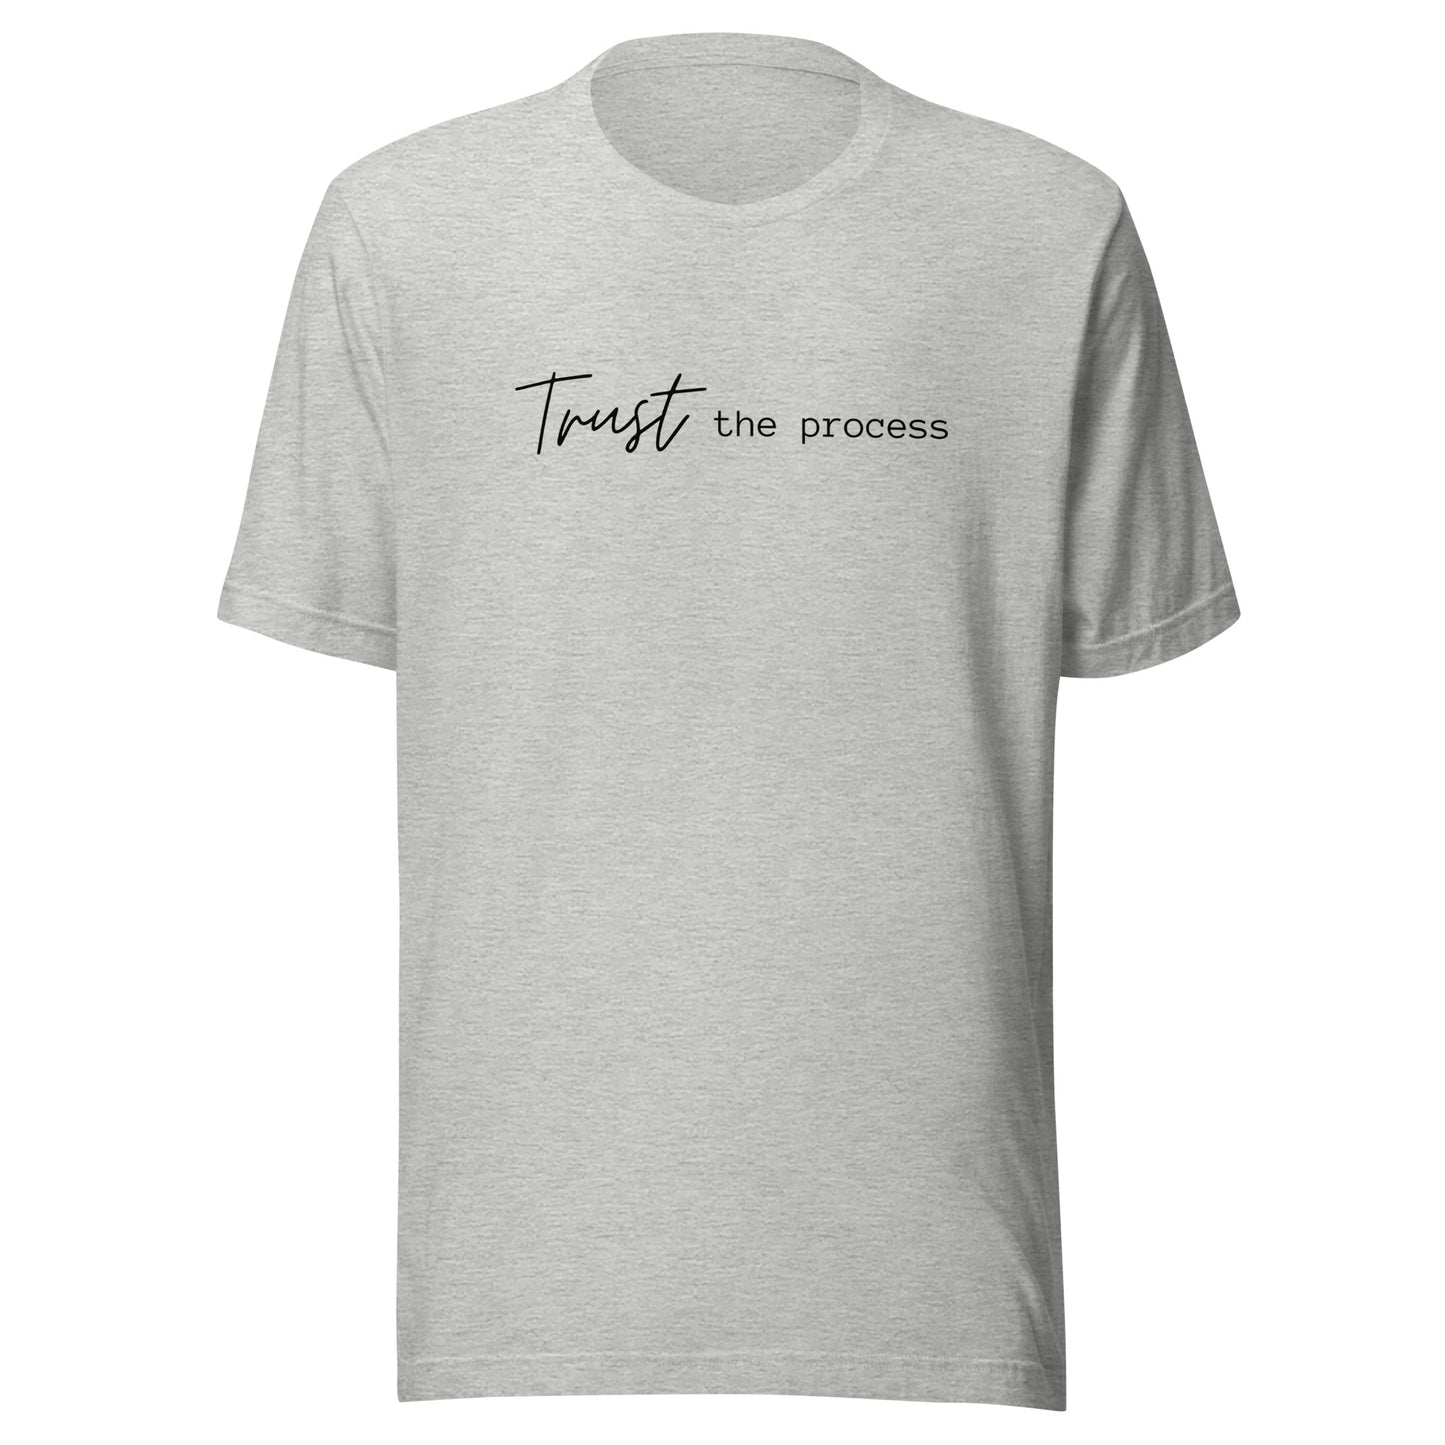 Trust the process - Unisex t-shirt